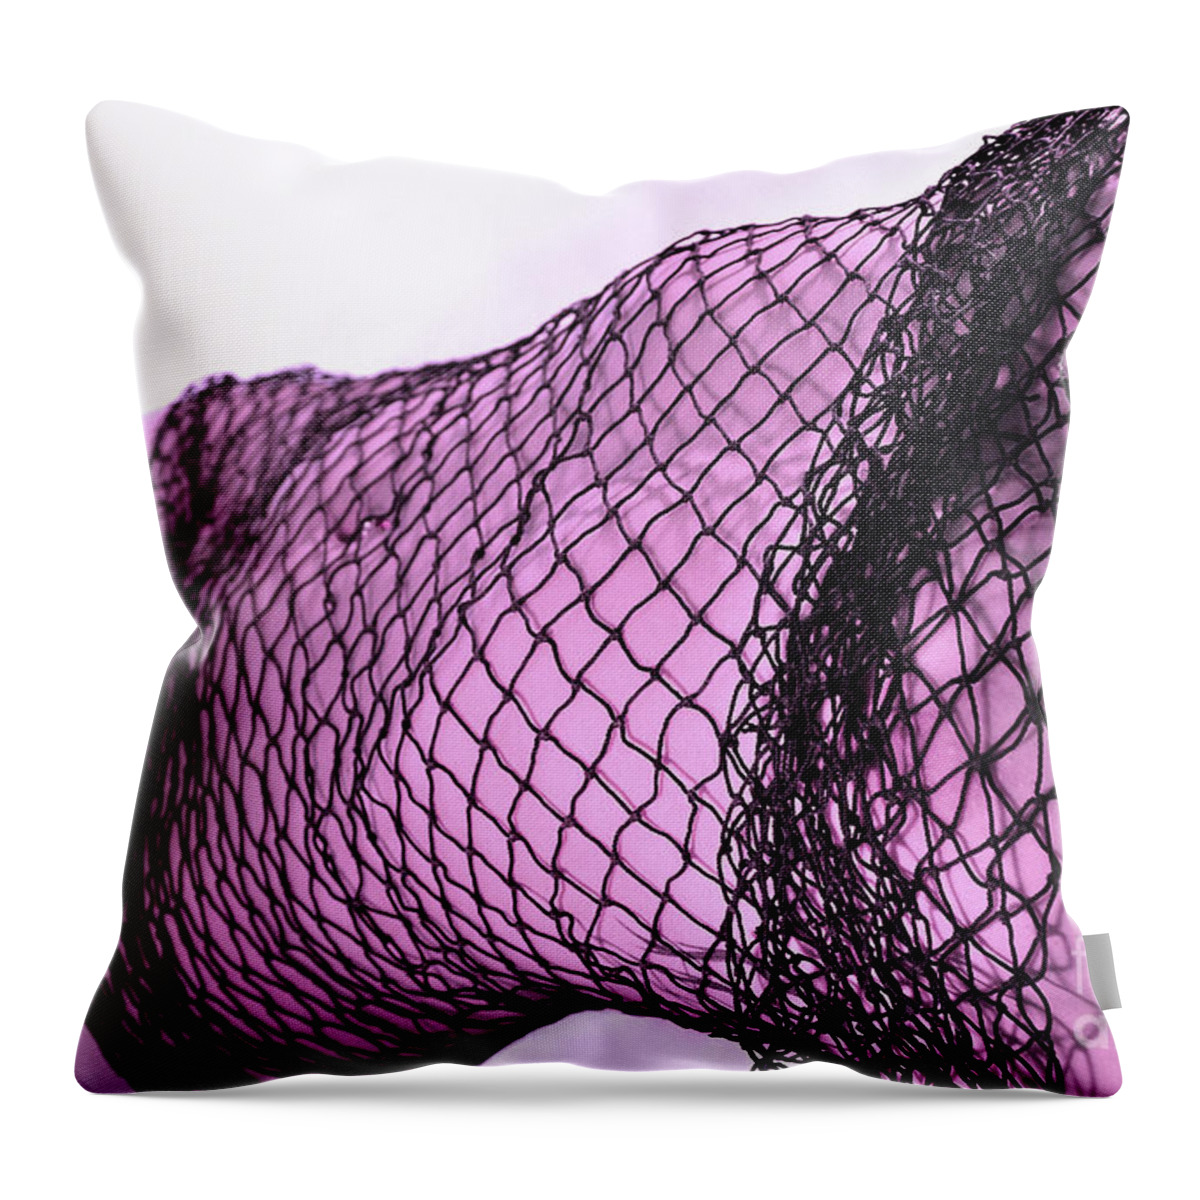 Artistic Throw Pillow featuring the photograph Violet net by Robert WK Clark